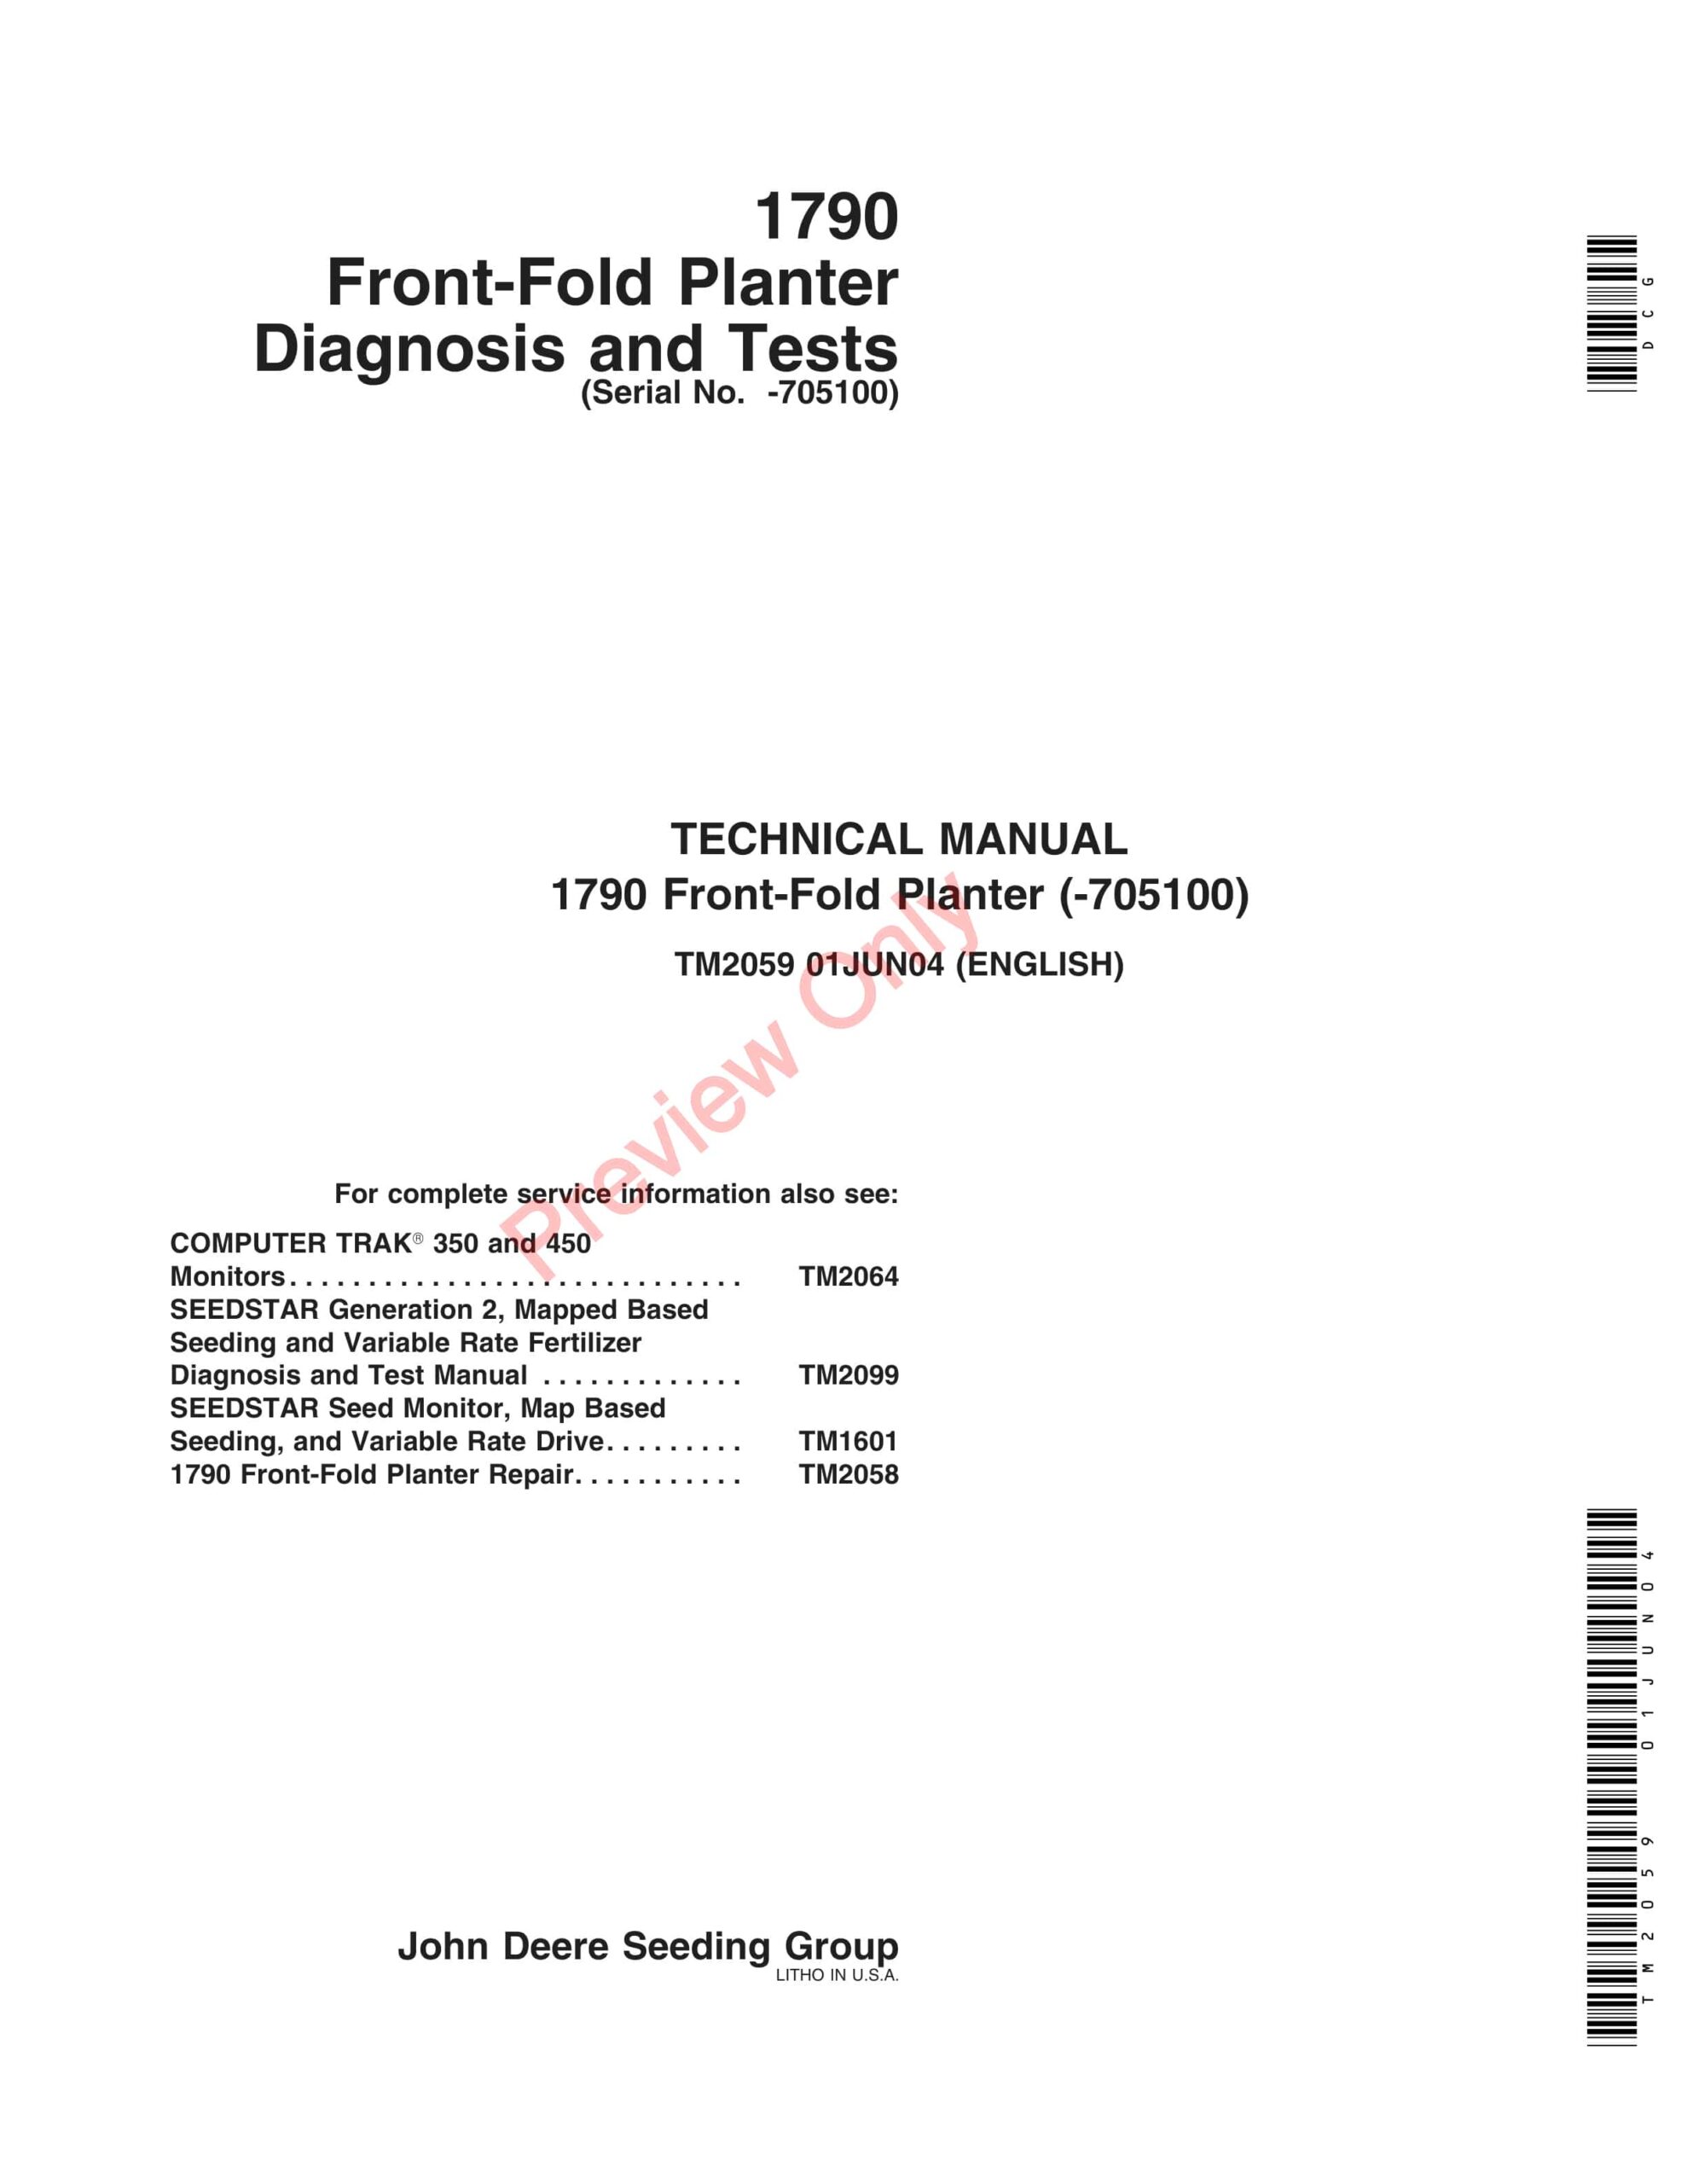 John Deere 1790 Front Fold Planter Technical Manual TM2059 01JUN04-1